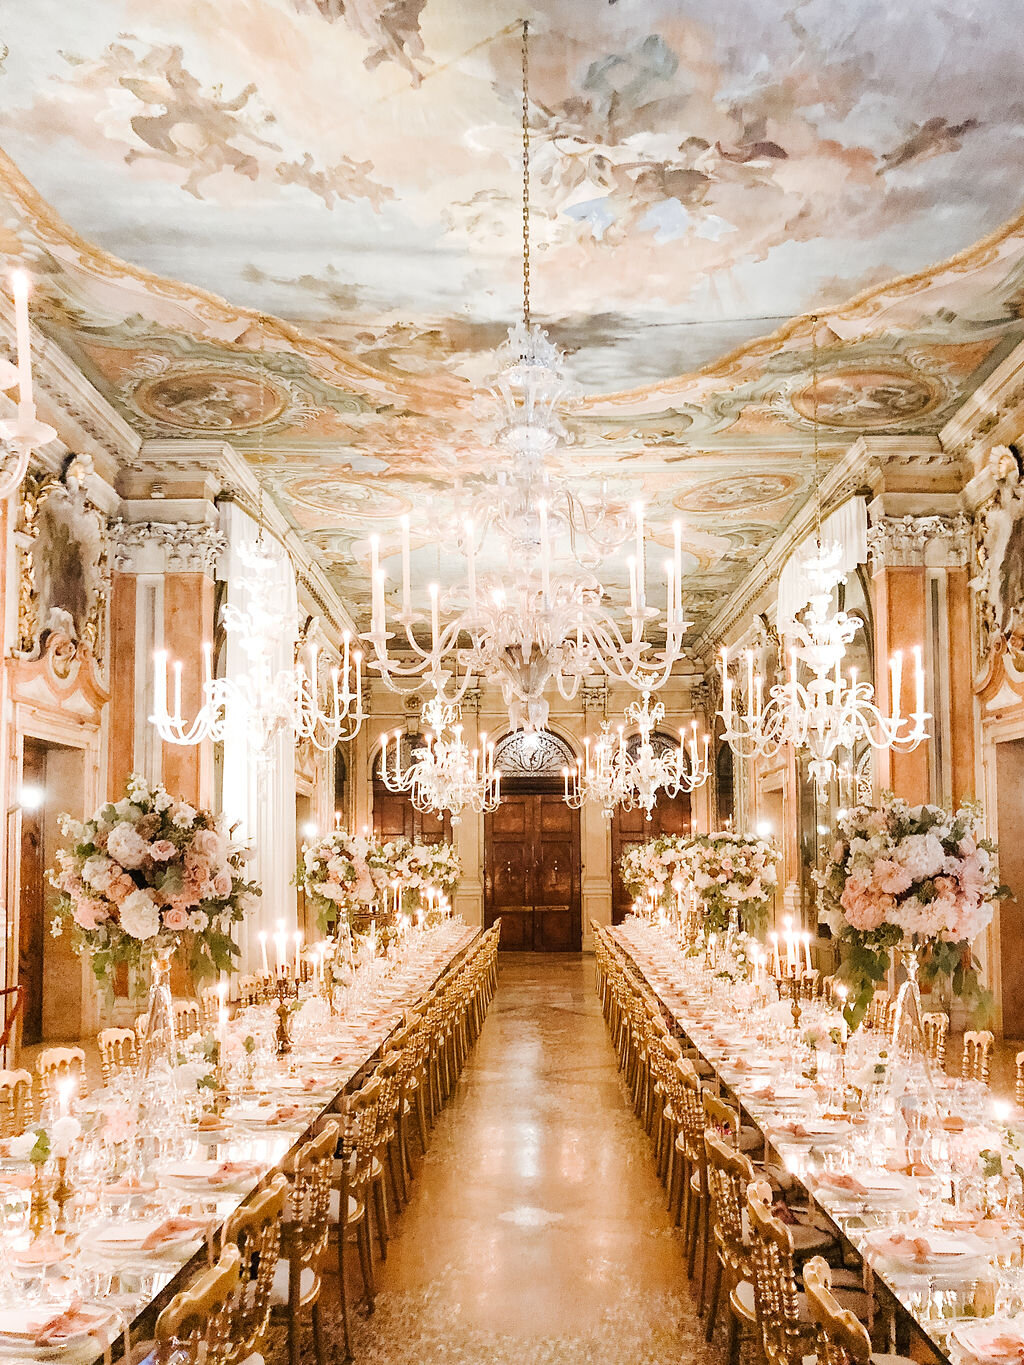 Venice destination wedding glamorous tablesetting at Palazzo Pisani Moretta